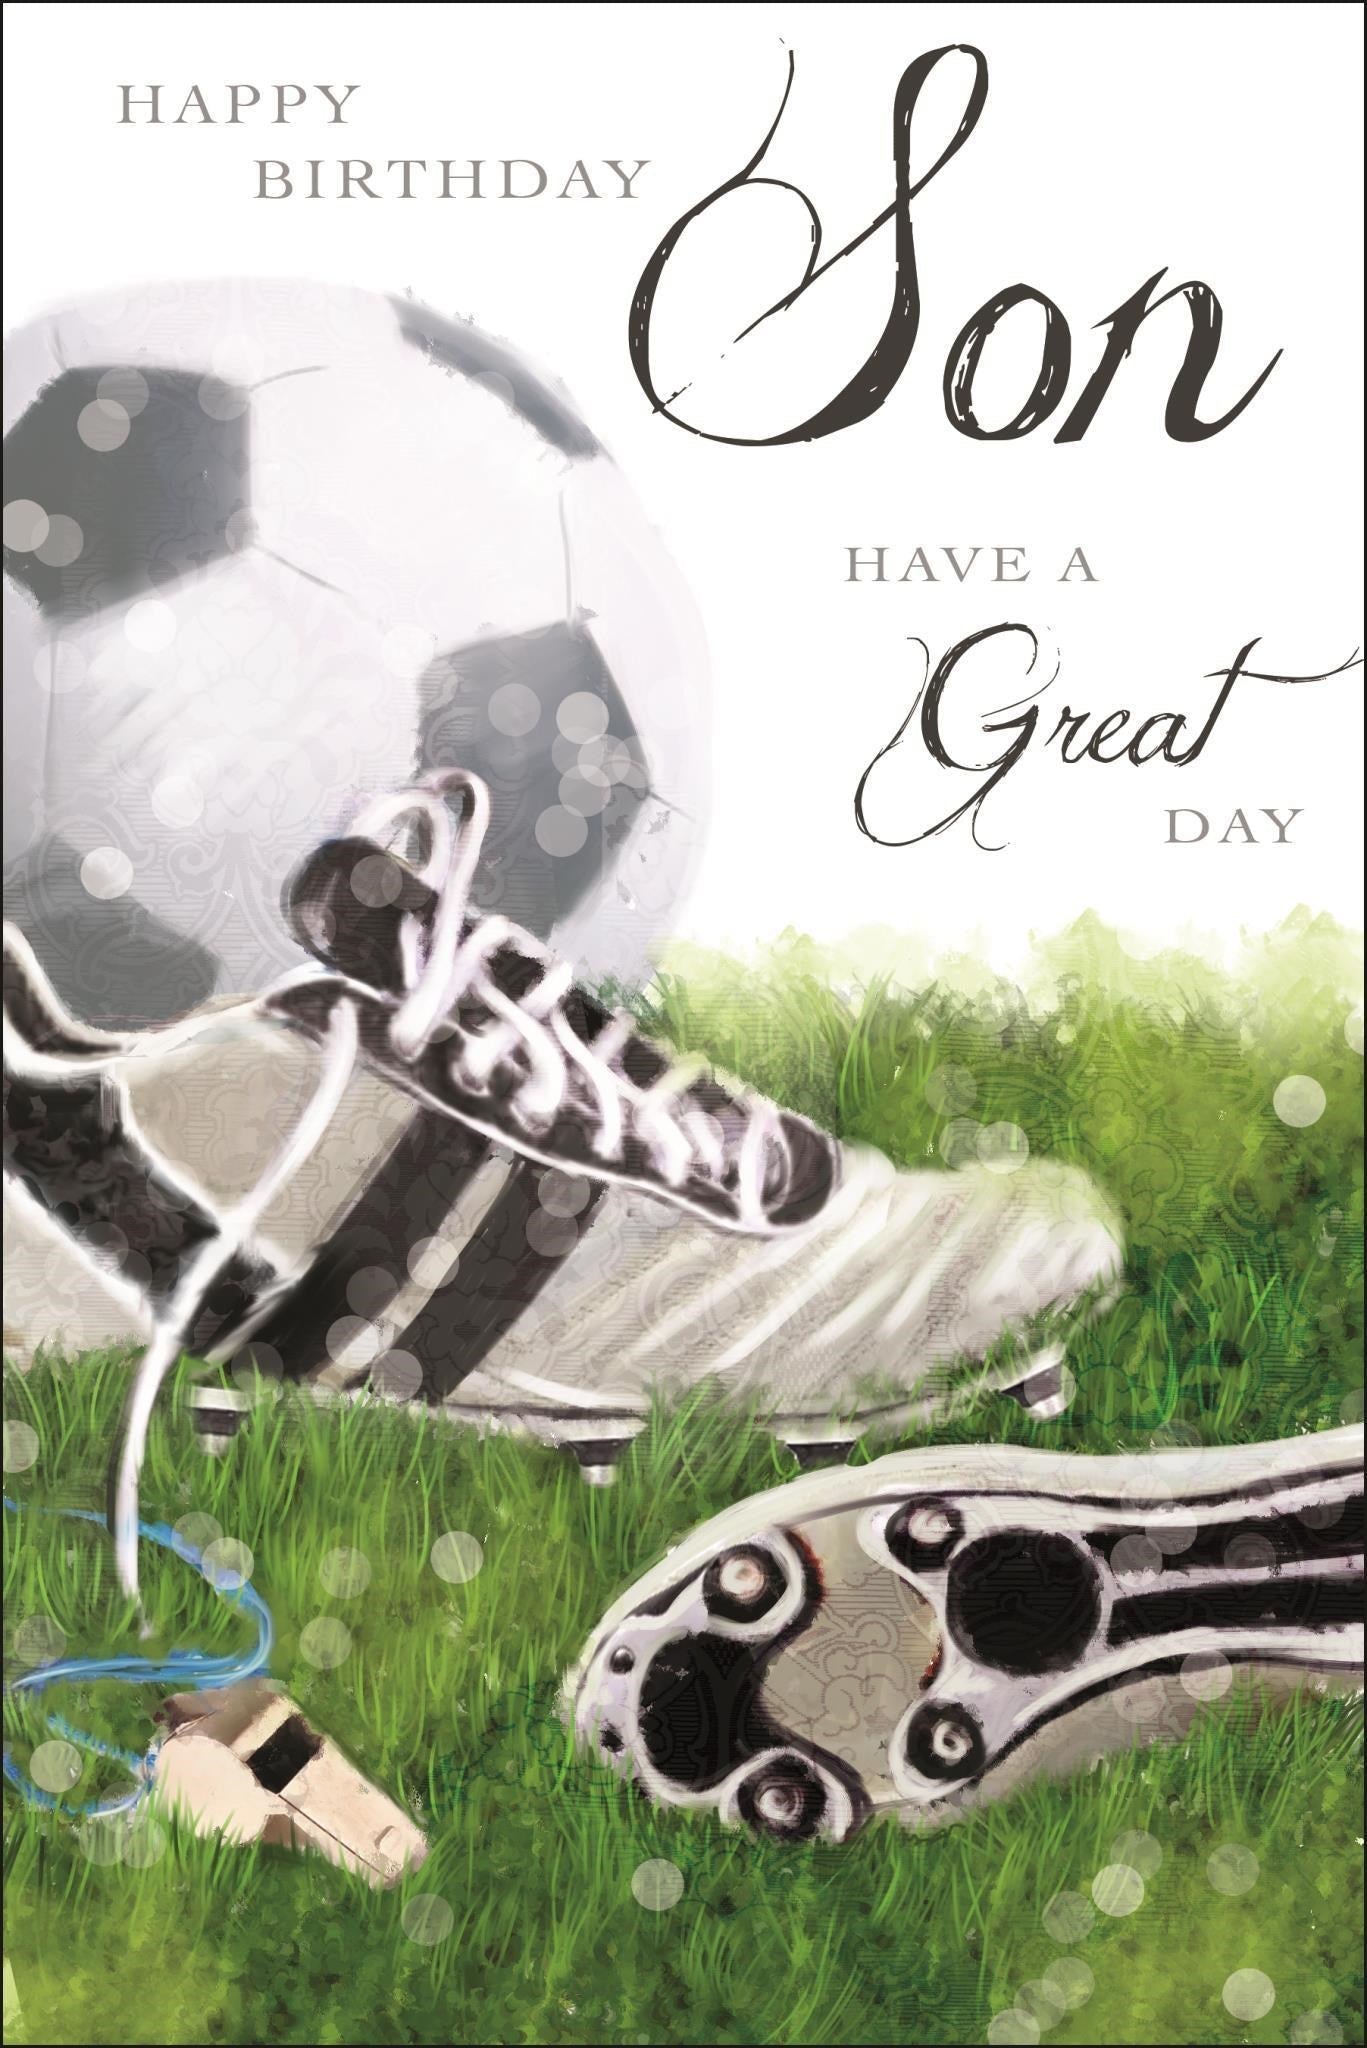 Son Birthday Card - Football And Football Boots